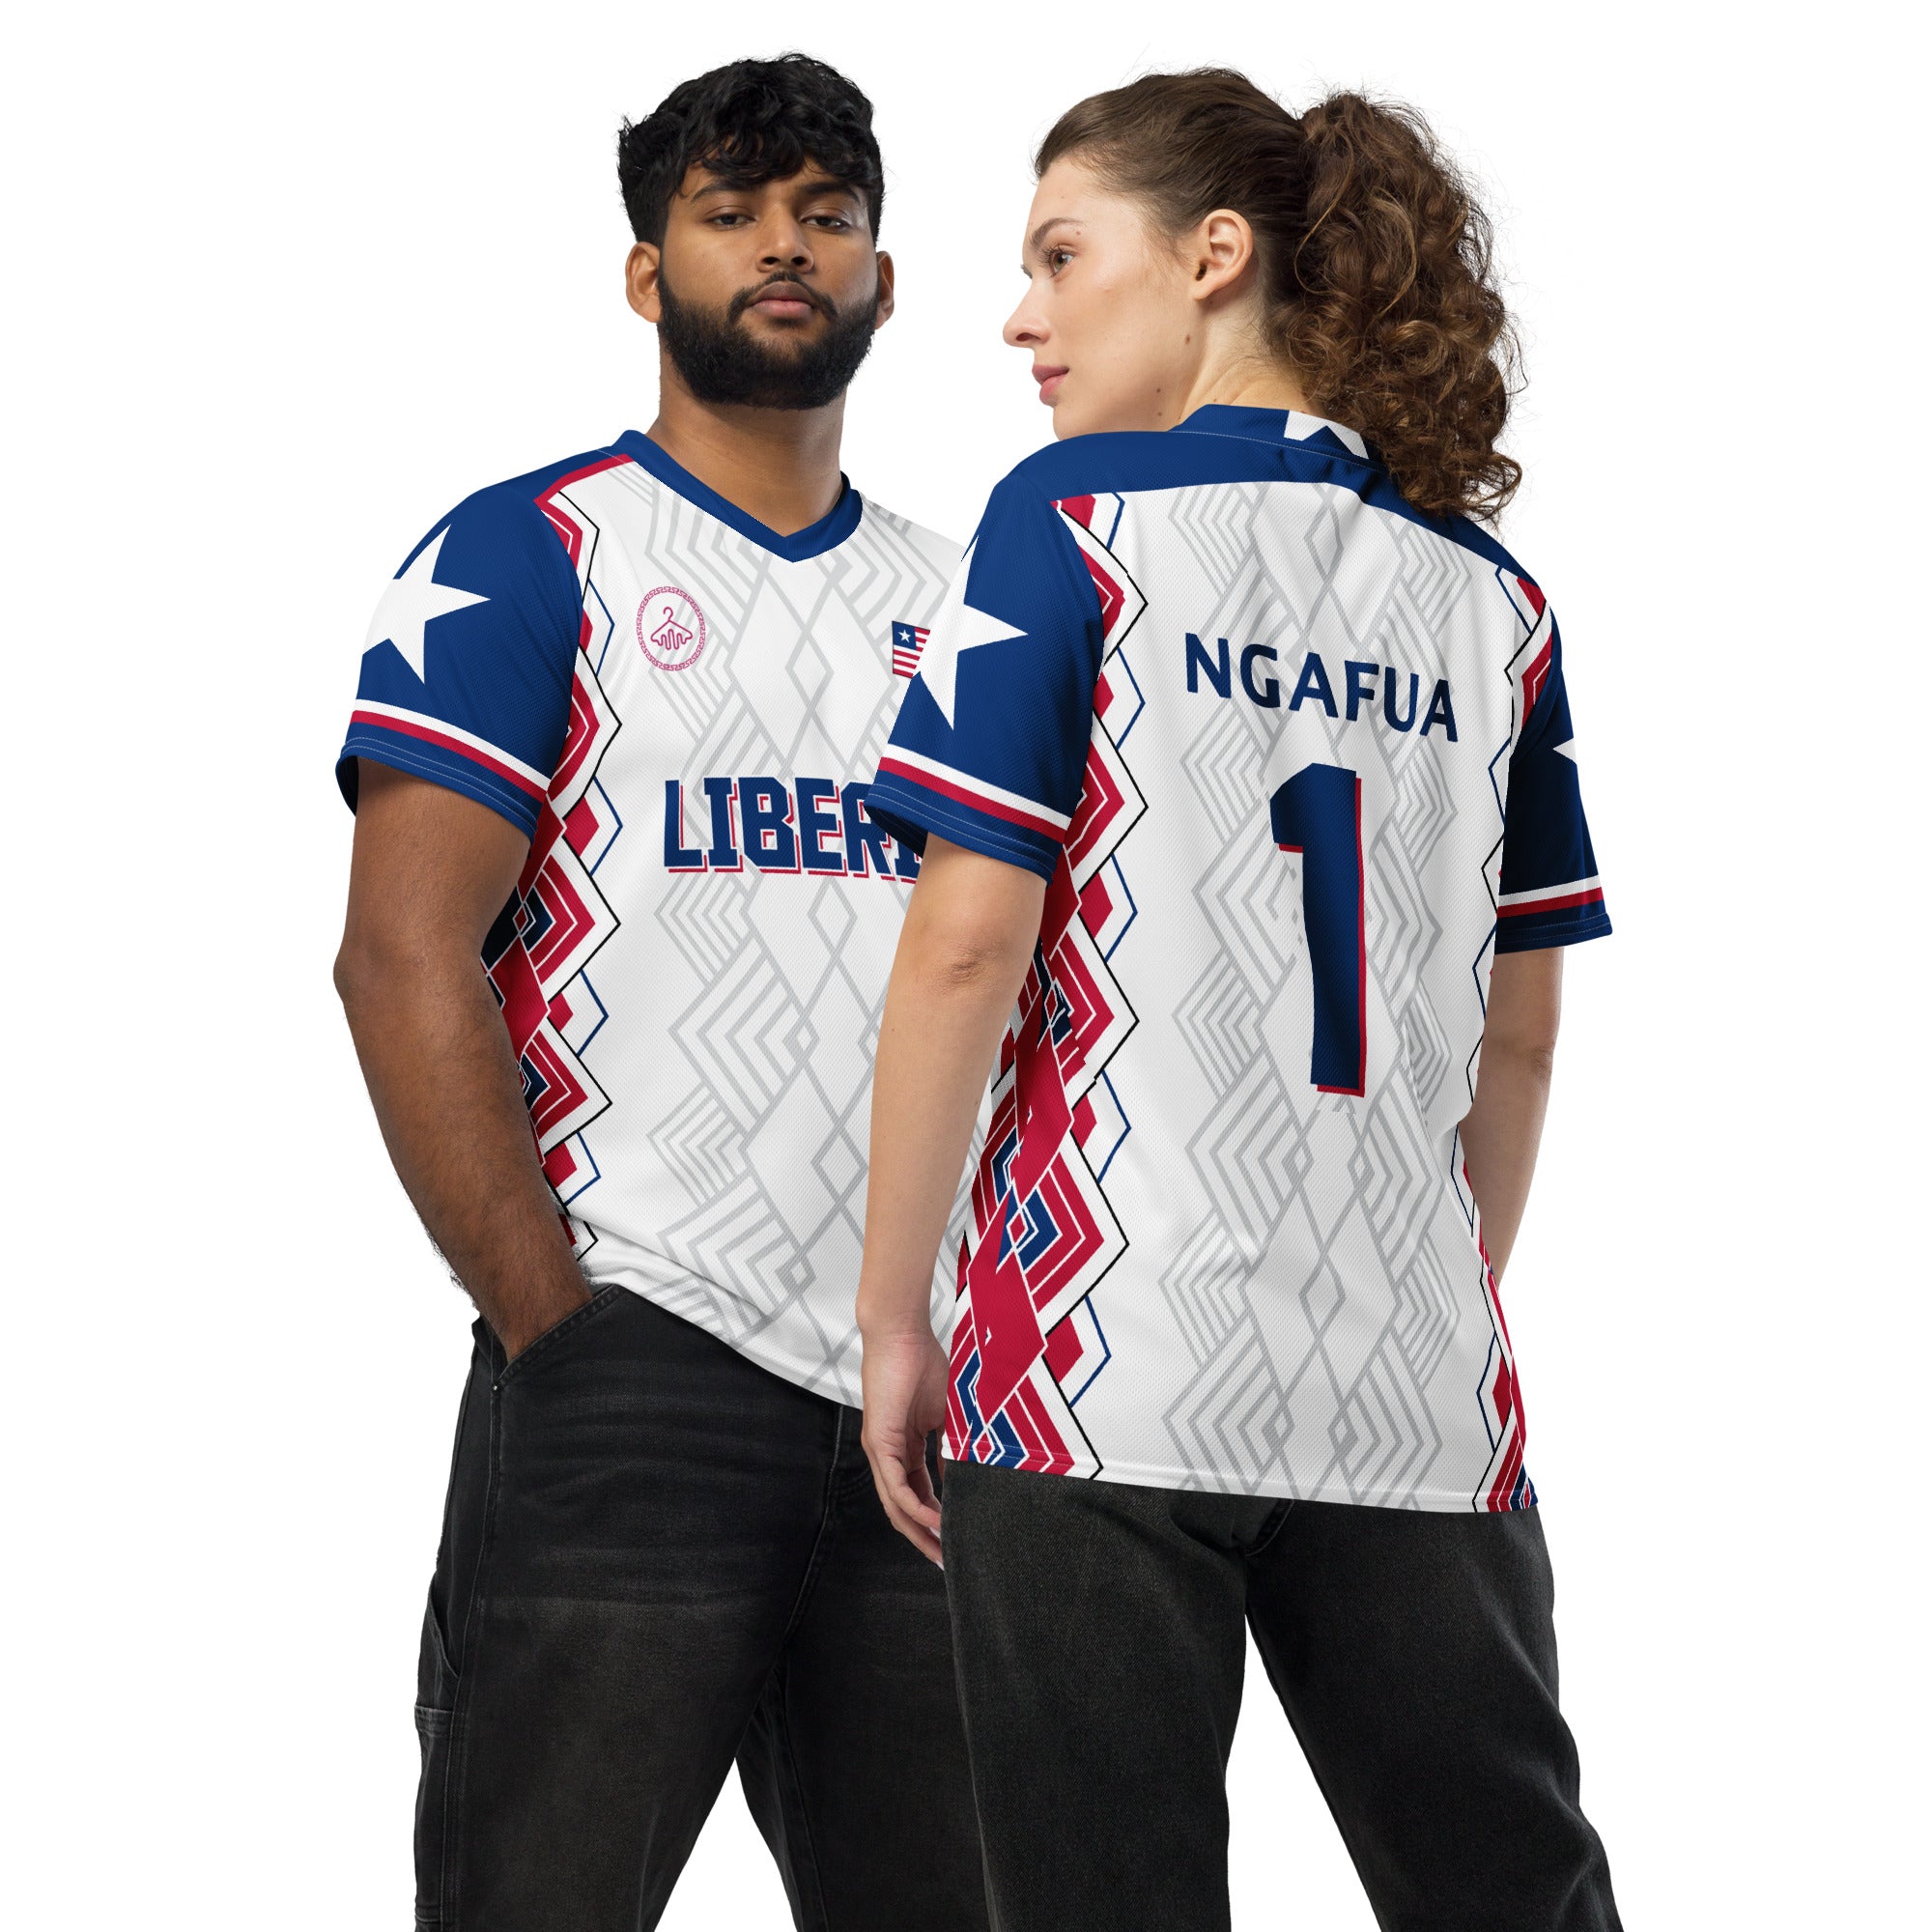 NGAFUA - LIBERIA unisex sports jersey